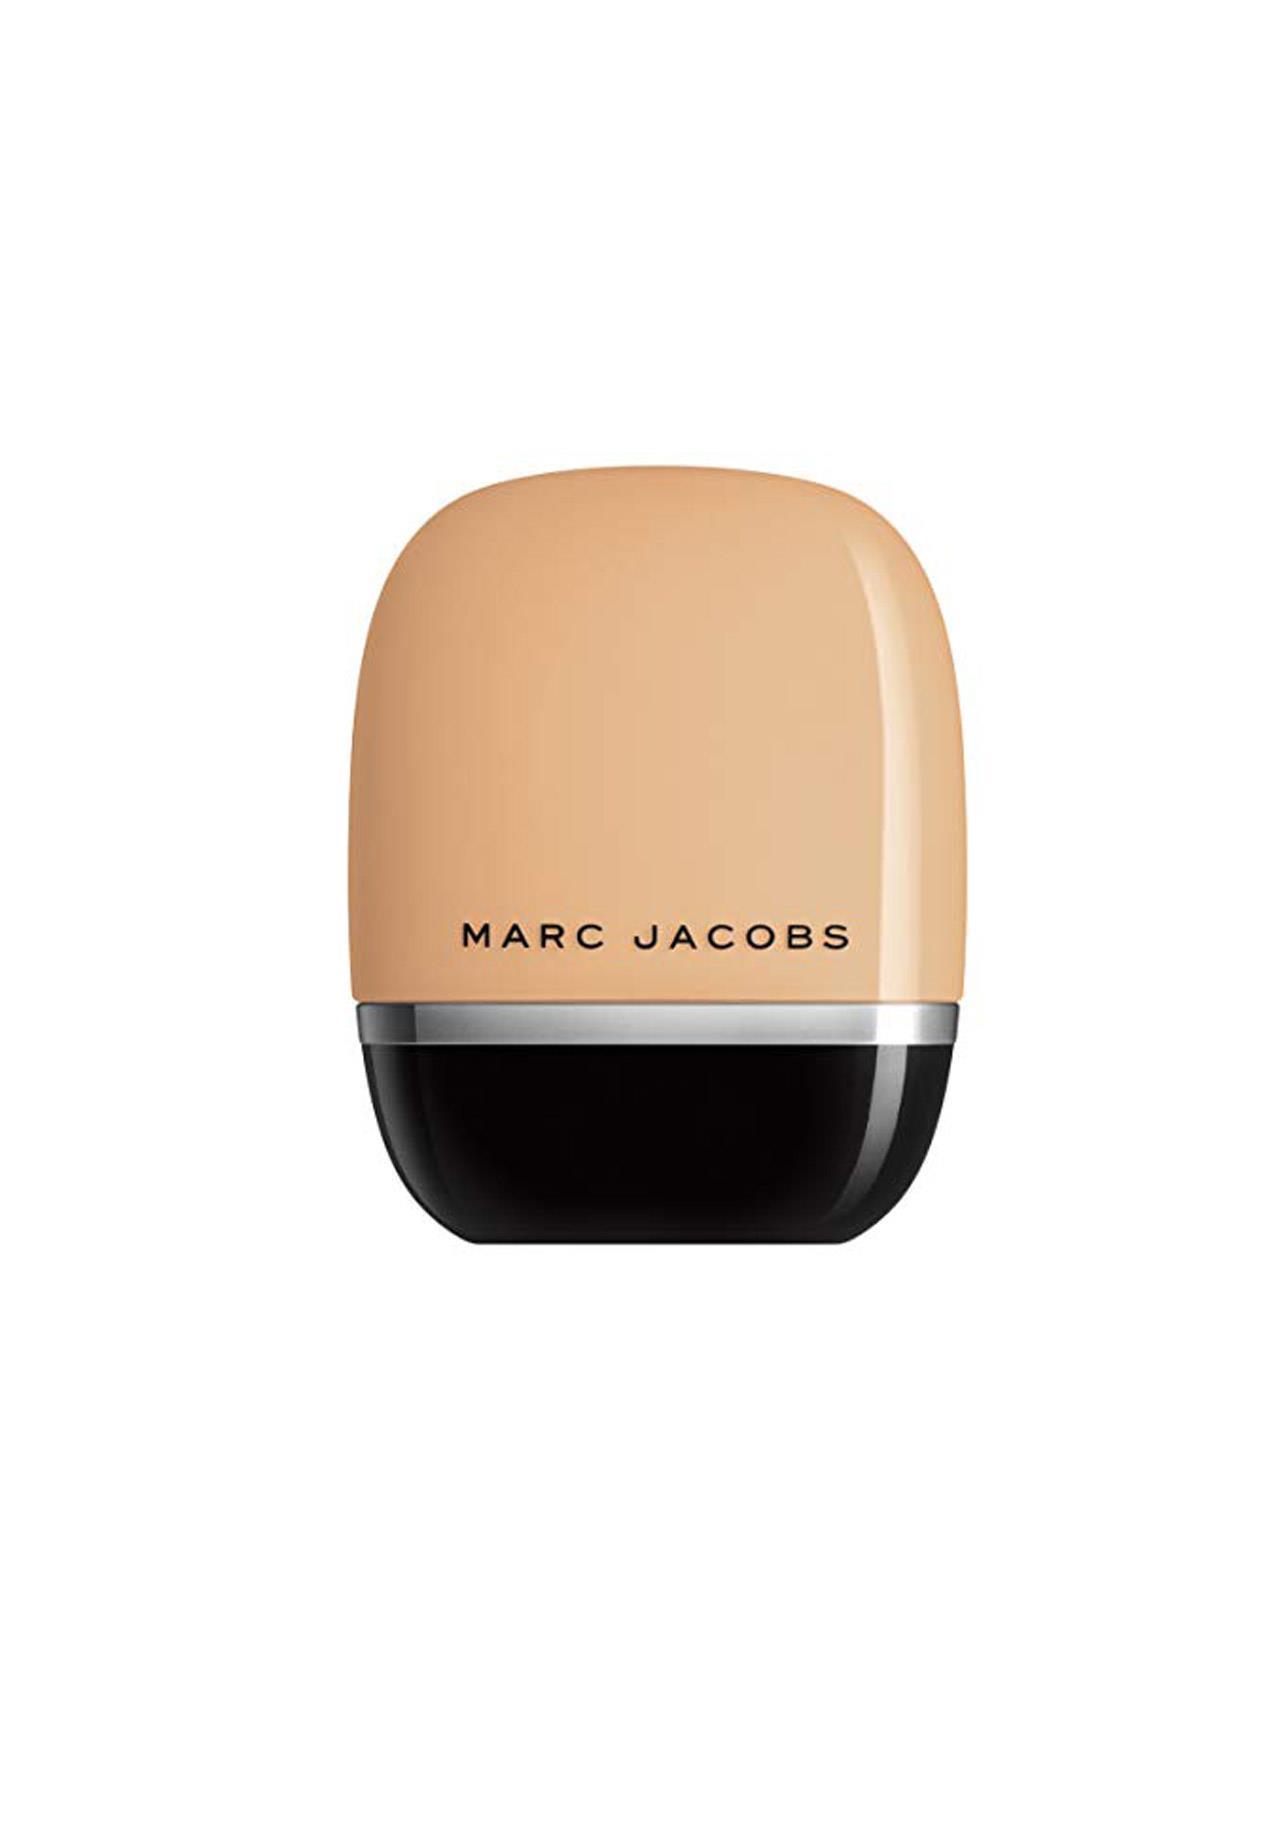 bases de maquillaje antiedad Base Shameless de Marc Jacobs, 41€